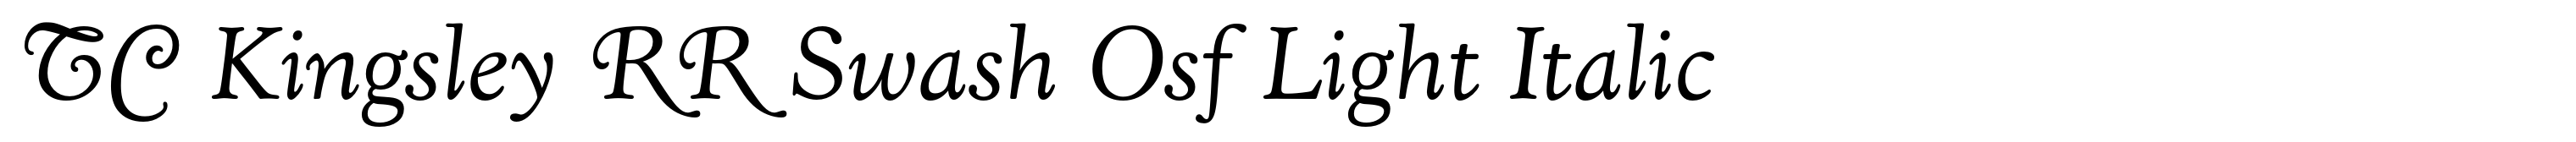 TC Kingsley RR Swash Osf Light Italic